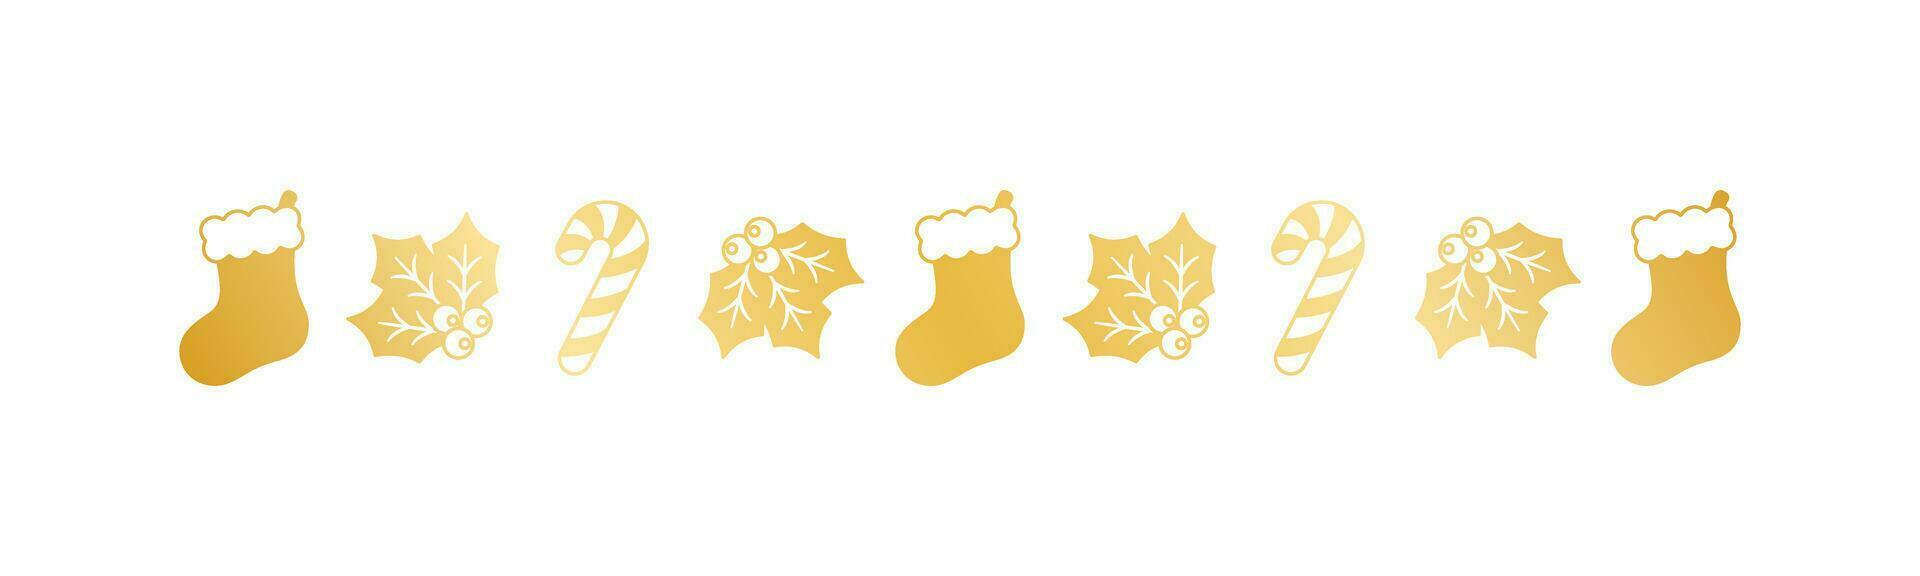 goud Kerstmis themed decoratief grens en tekst verdeler, Kerstmis kous, snoep riet en maretak patroon silhouet. vector illustratie.